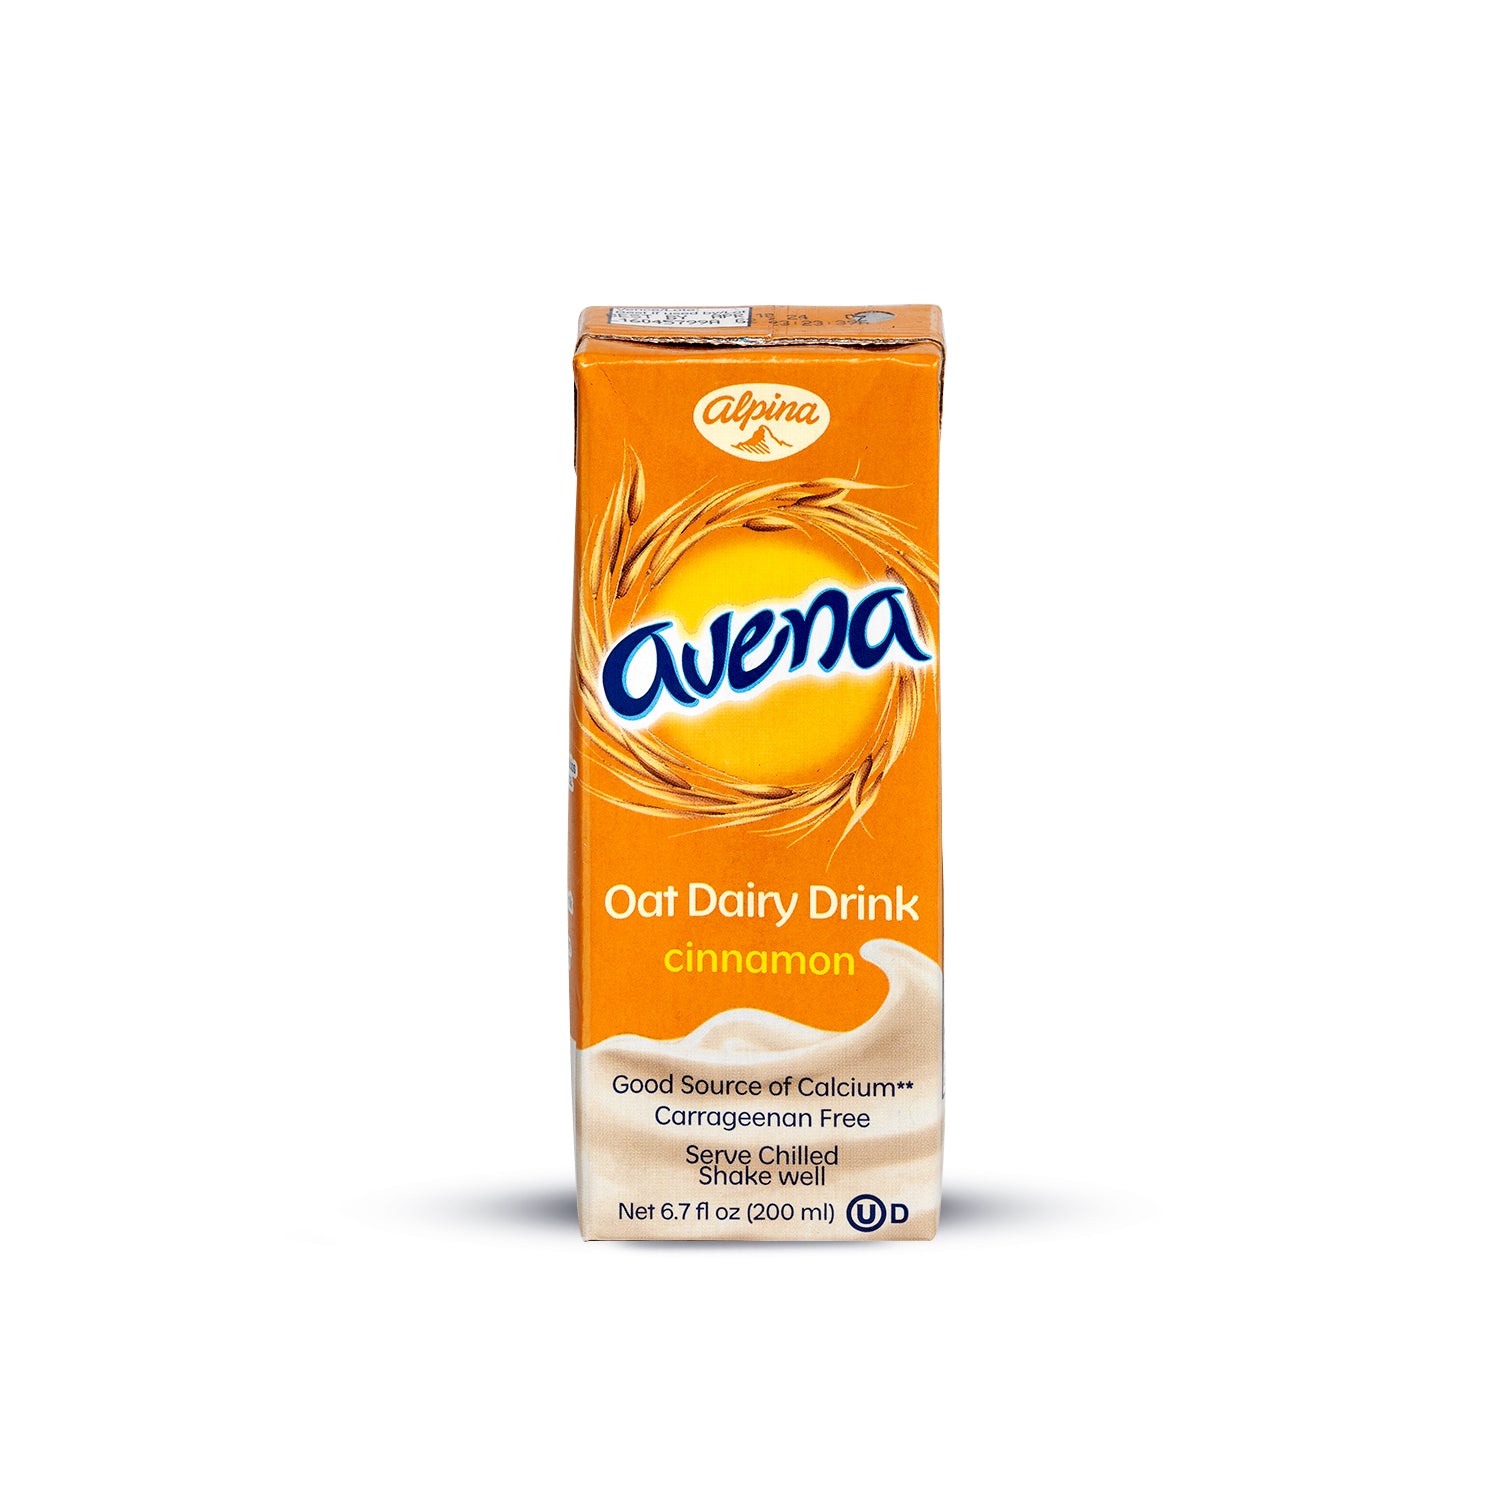 Oat Dairy Drink - Cinnamon - 6.7 FL OZ